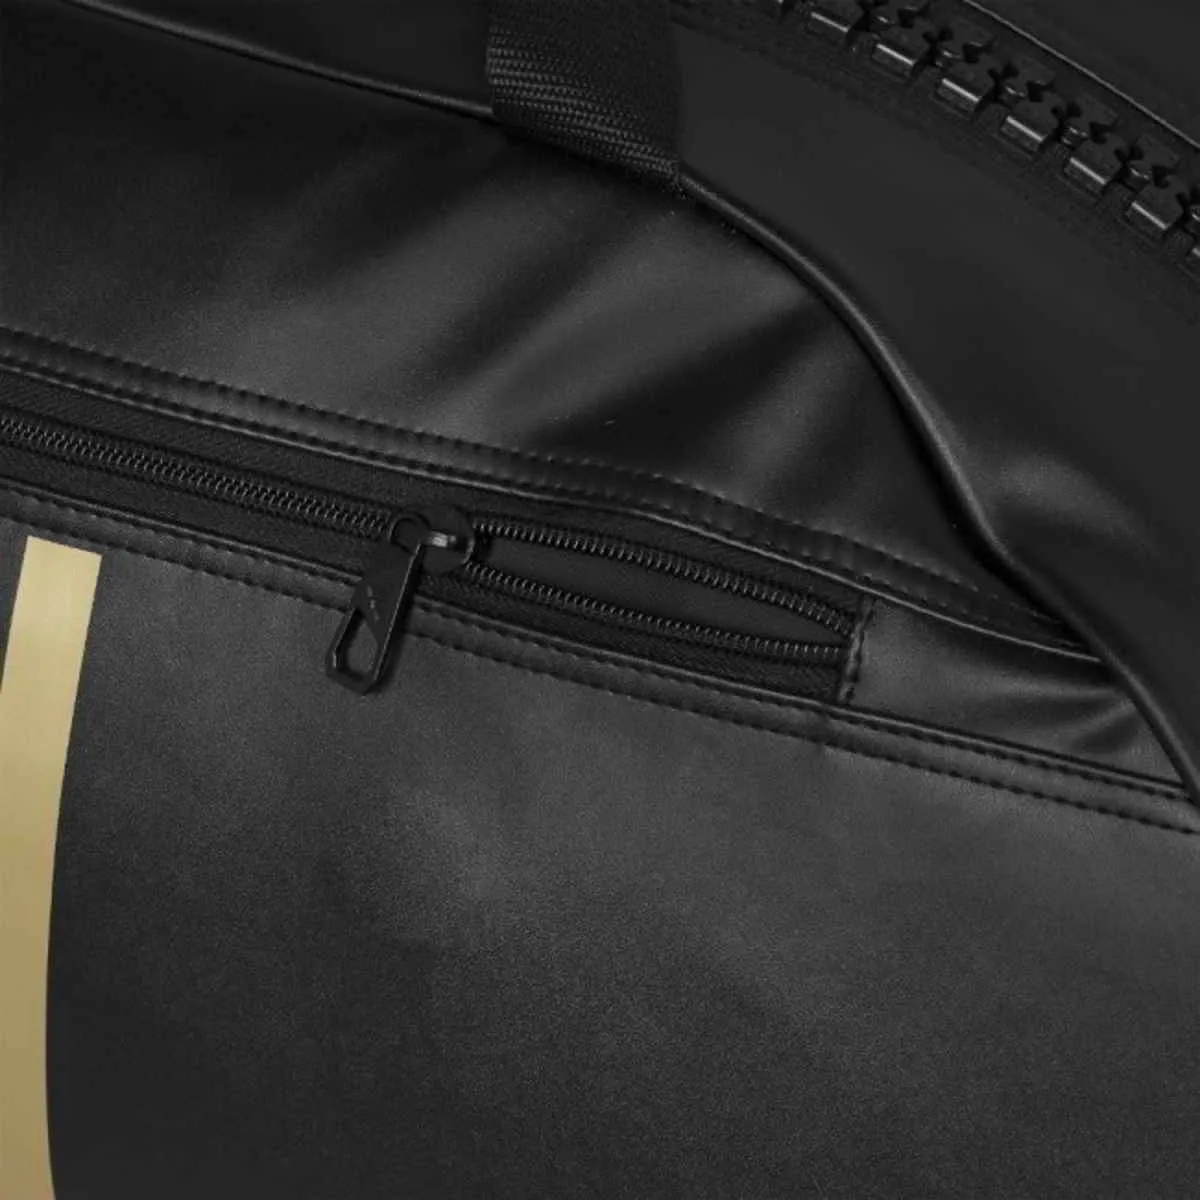 adidas sports bag - sports rucksack imitation leather black/gold